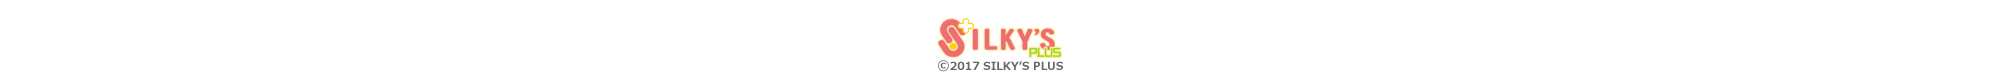 (c) 2017 SILKY'S PLUS